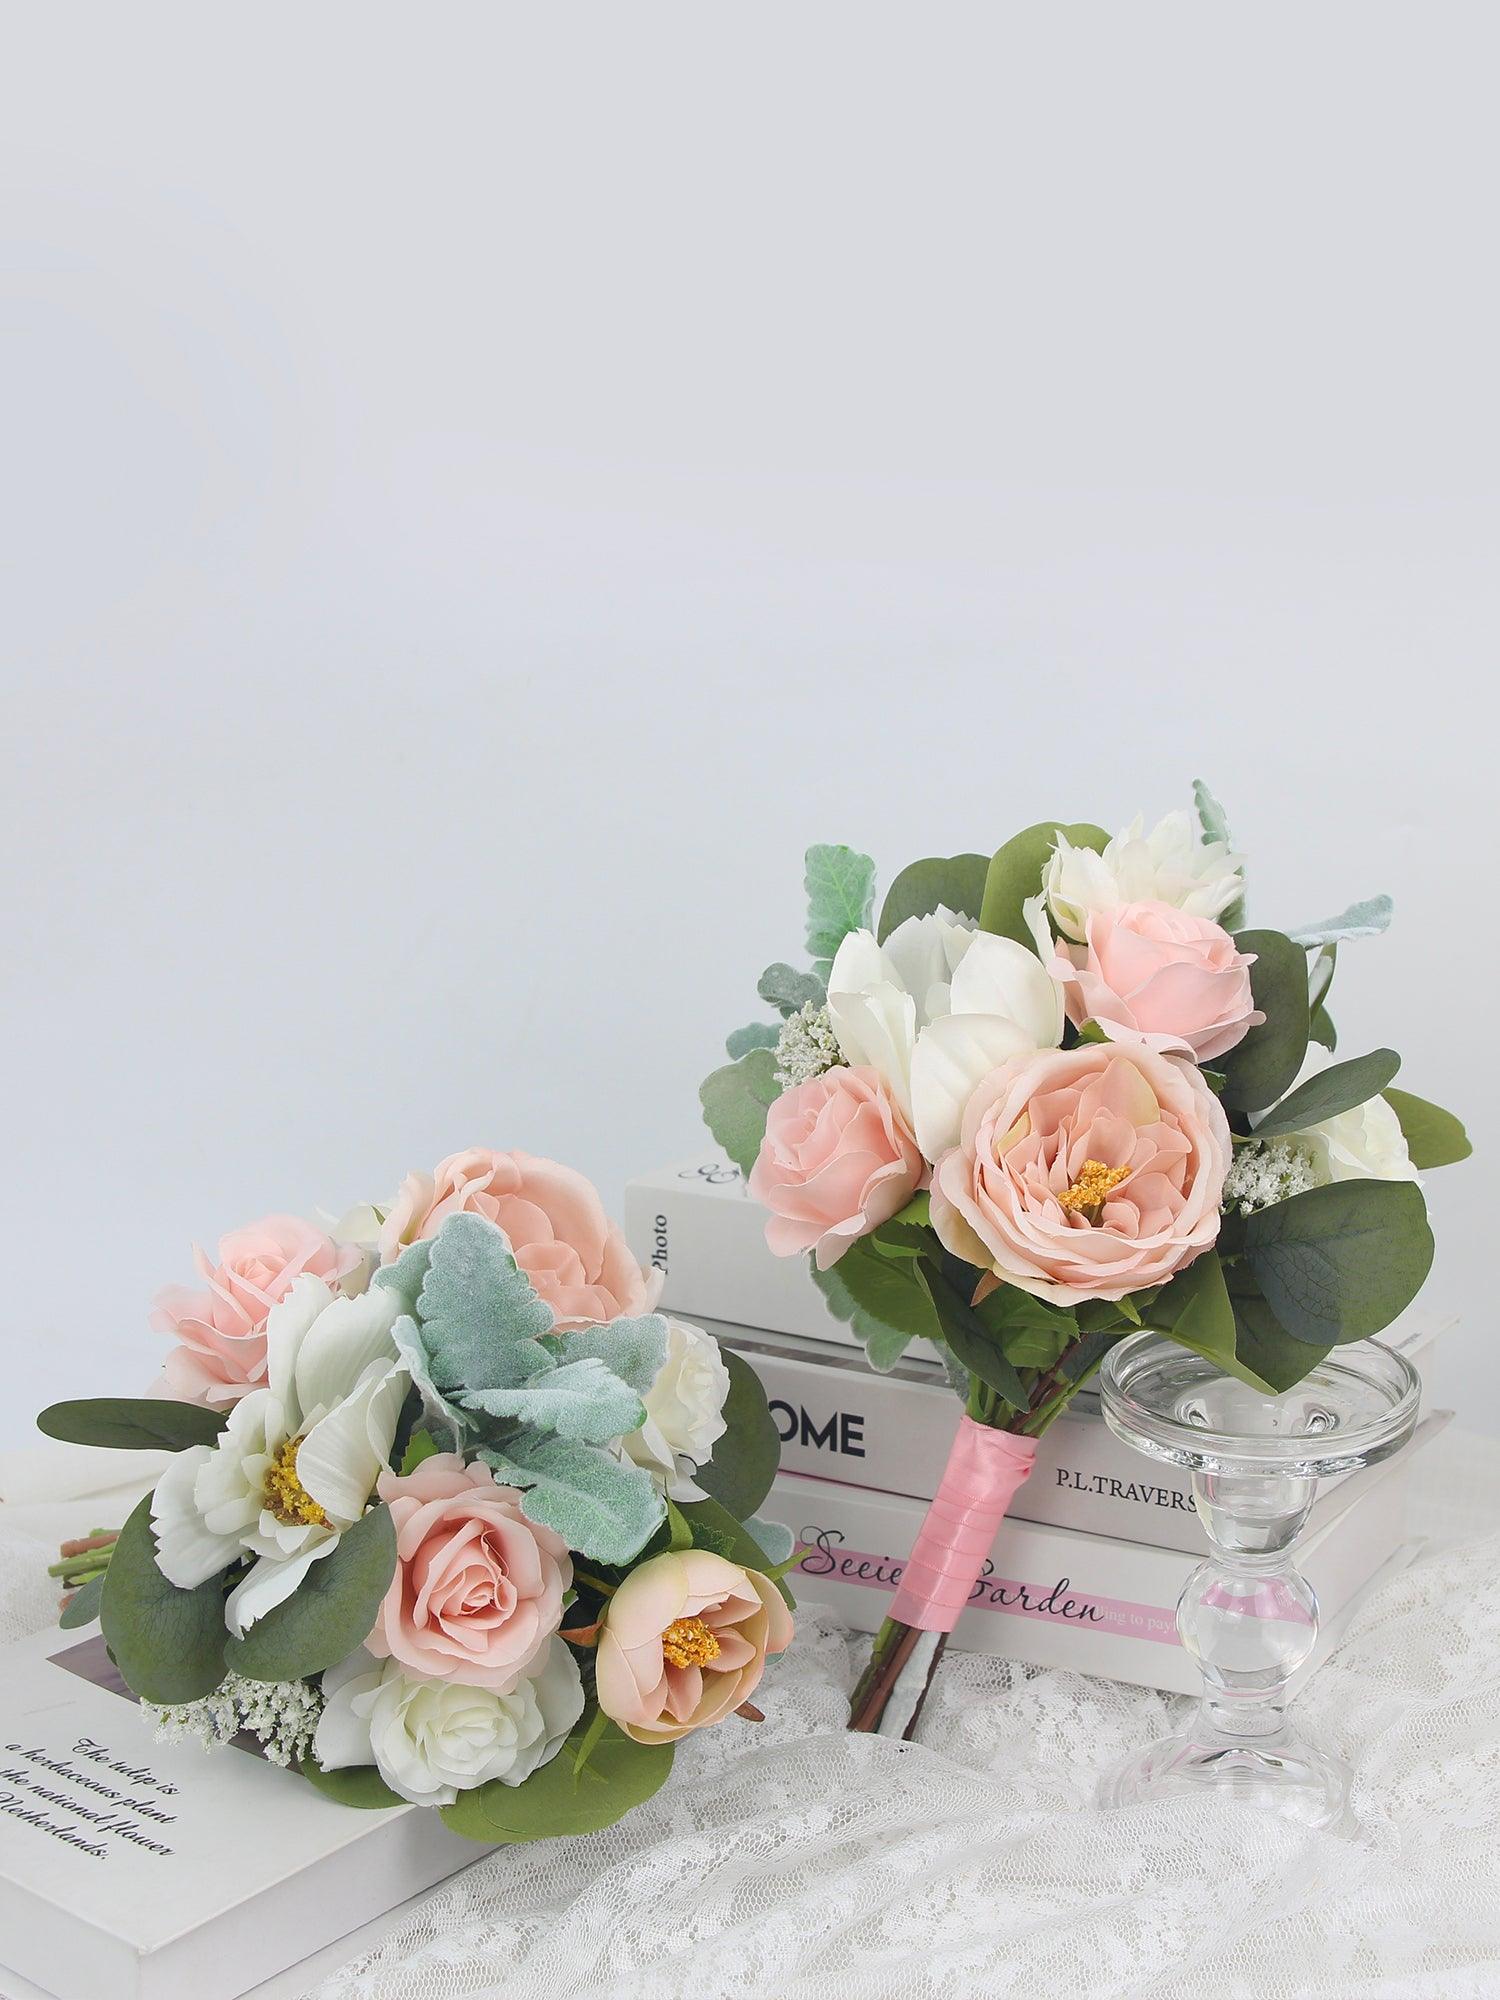 7 inch wide Blush Pink & White Bridesmaid Bouquet - Rinlong Flower